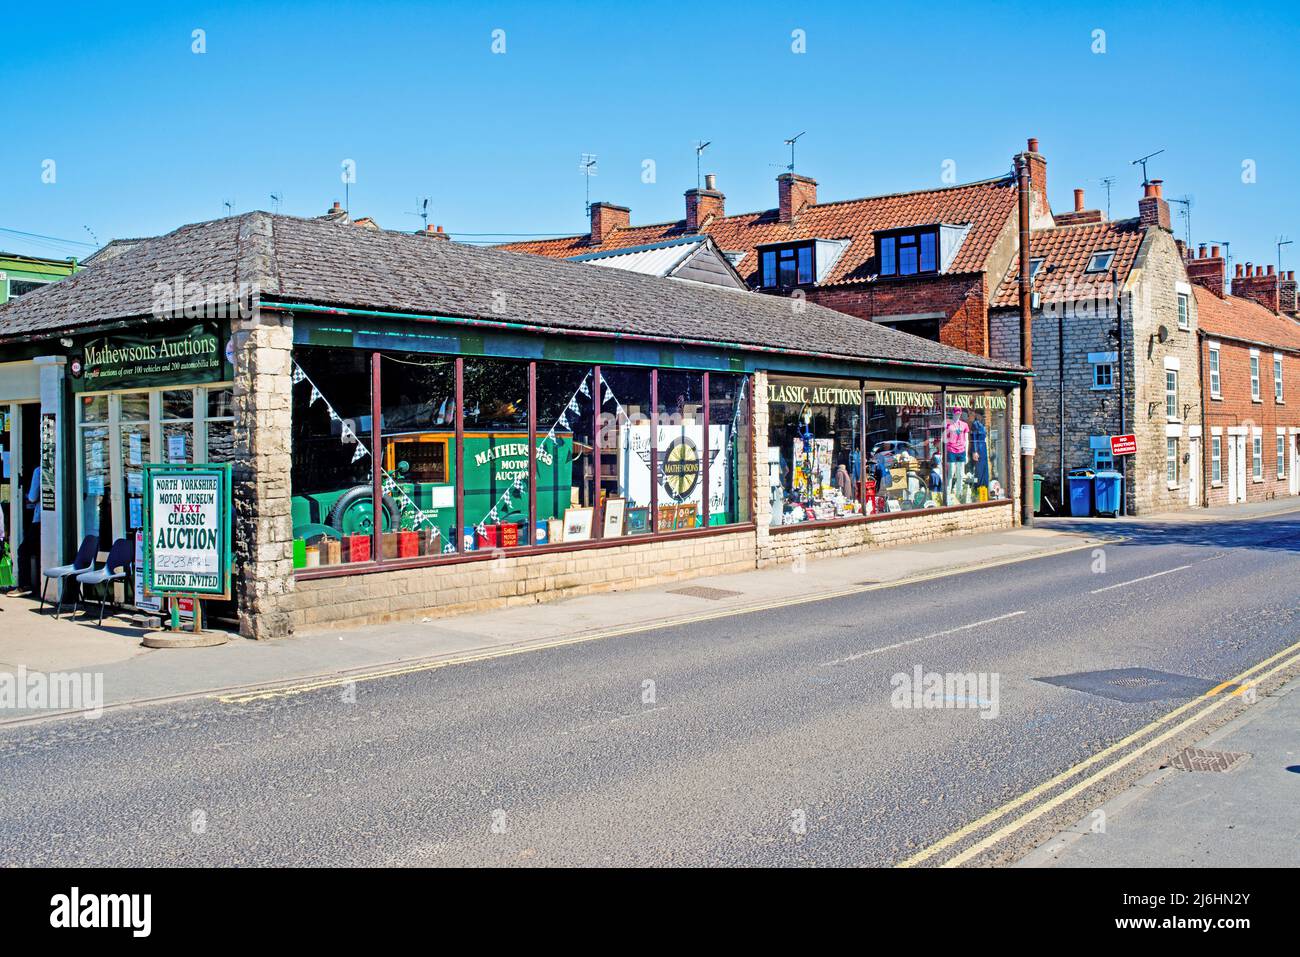 Mathewsons Motor Auctions, Bangers y Cash TV series, Thornton le Dale, North Yorkshire, Inglaterra Foto de stock